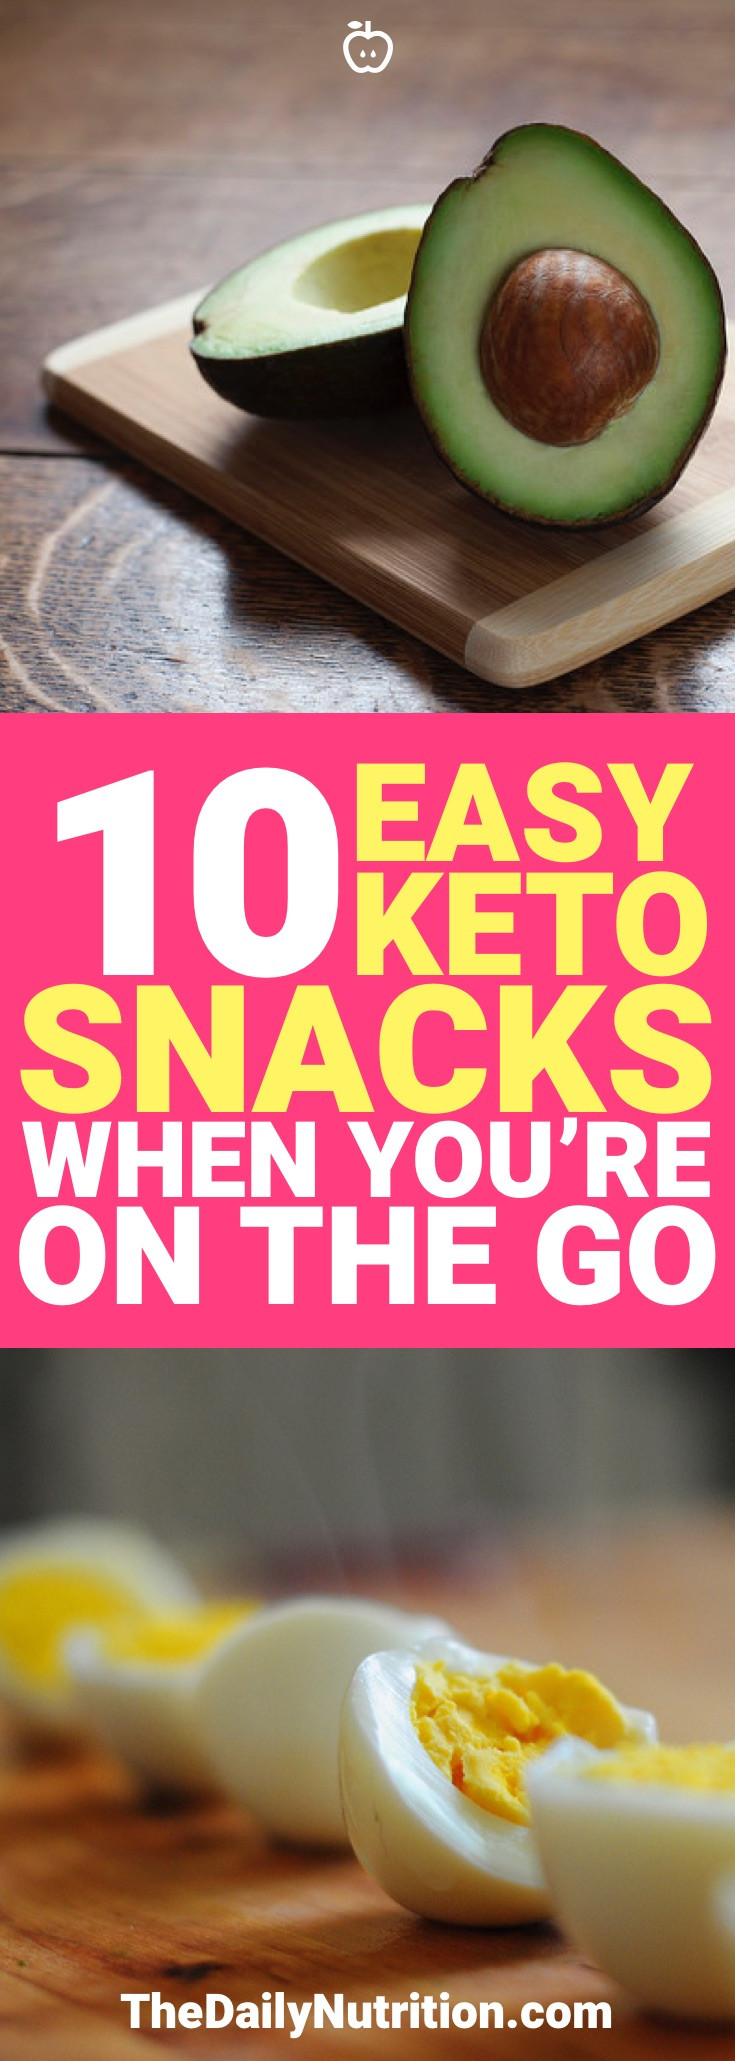 Keto Diet Snacks On The Go
 10 Simple Keto Snacks When You re the Go